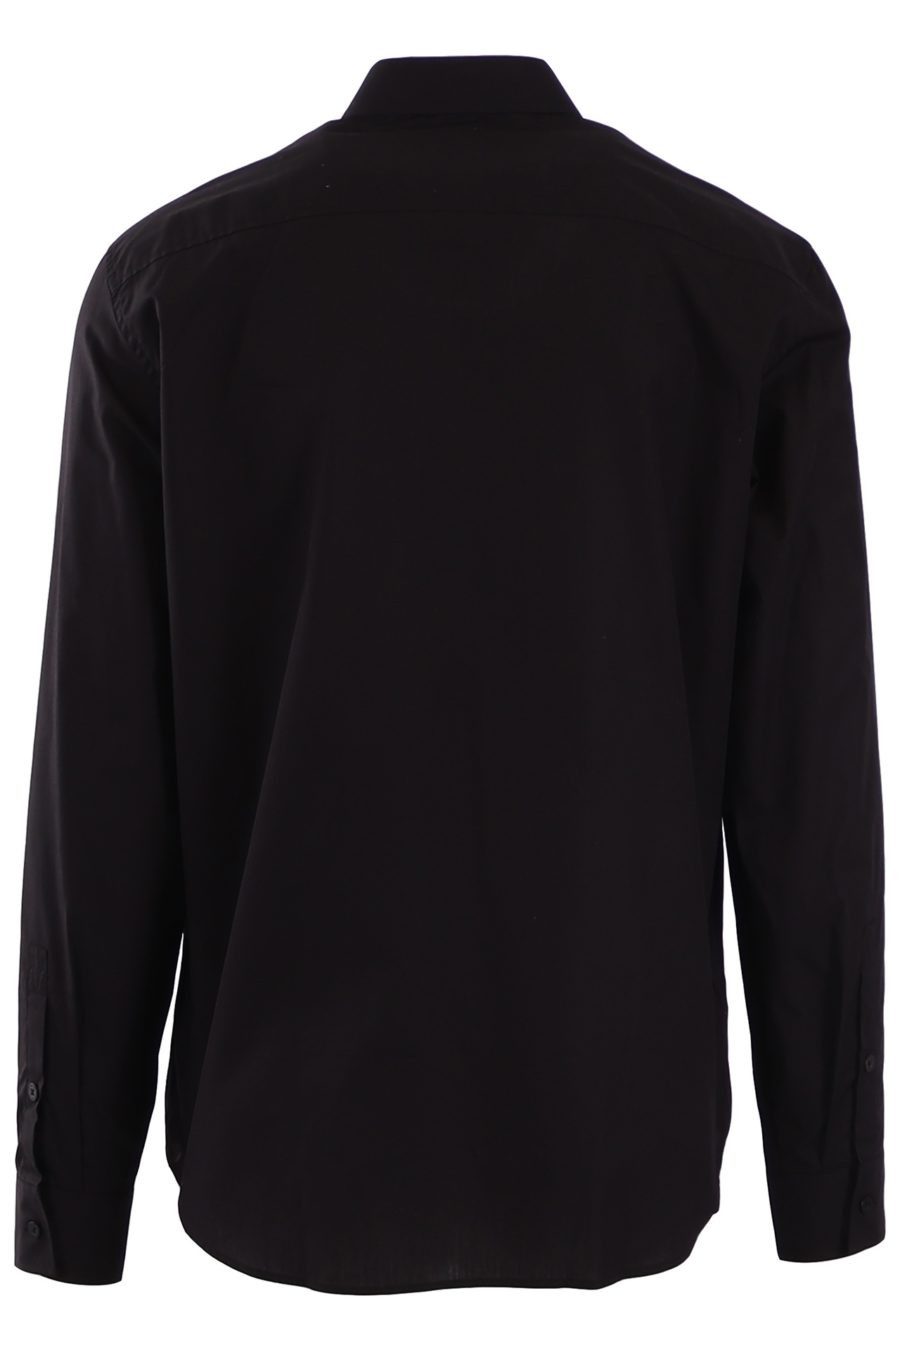 Camisa Versace Jeans Couture negra con logo gris - 67e572c90e03190a72fc4bbe213a1bab351fccd6